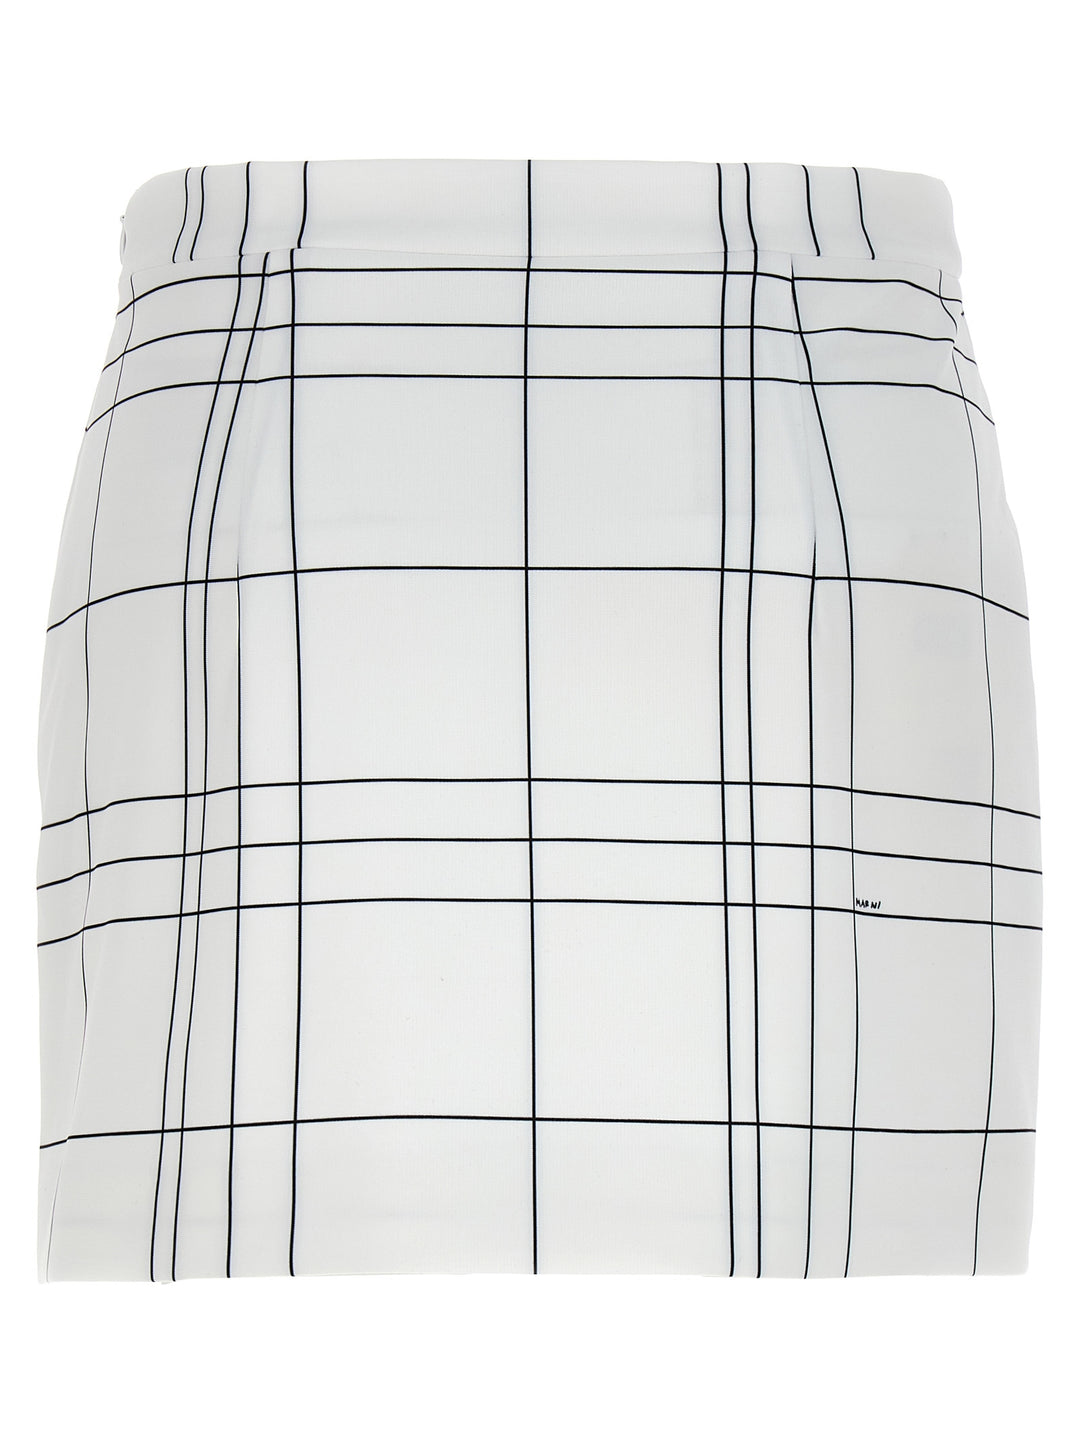 Patterned Skirt Gonne Bianco/Nero